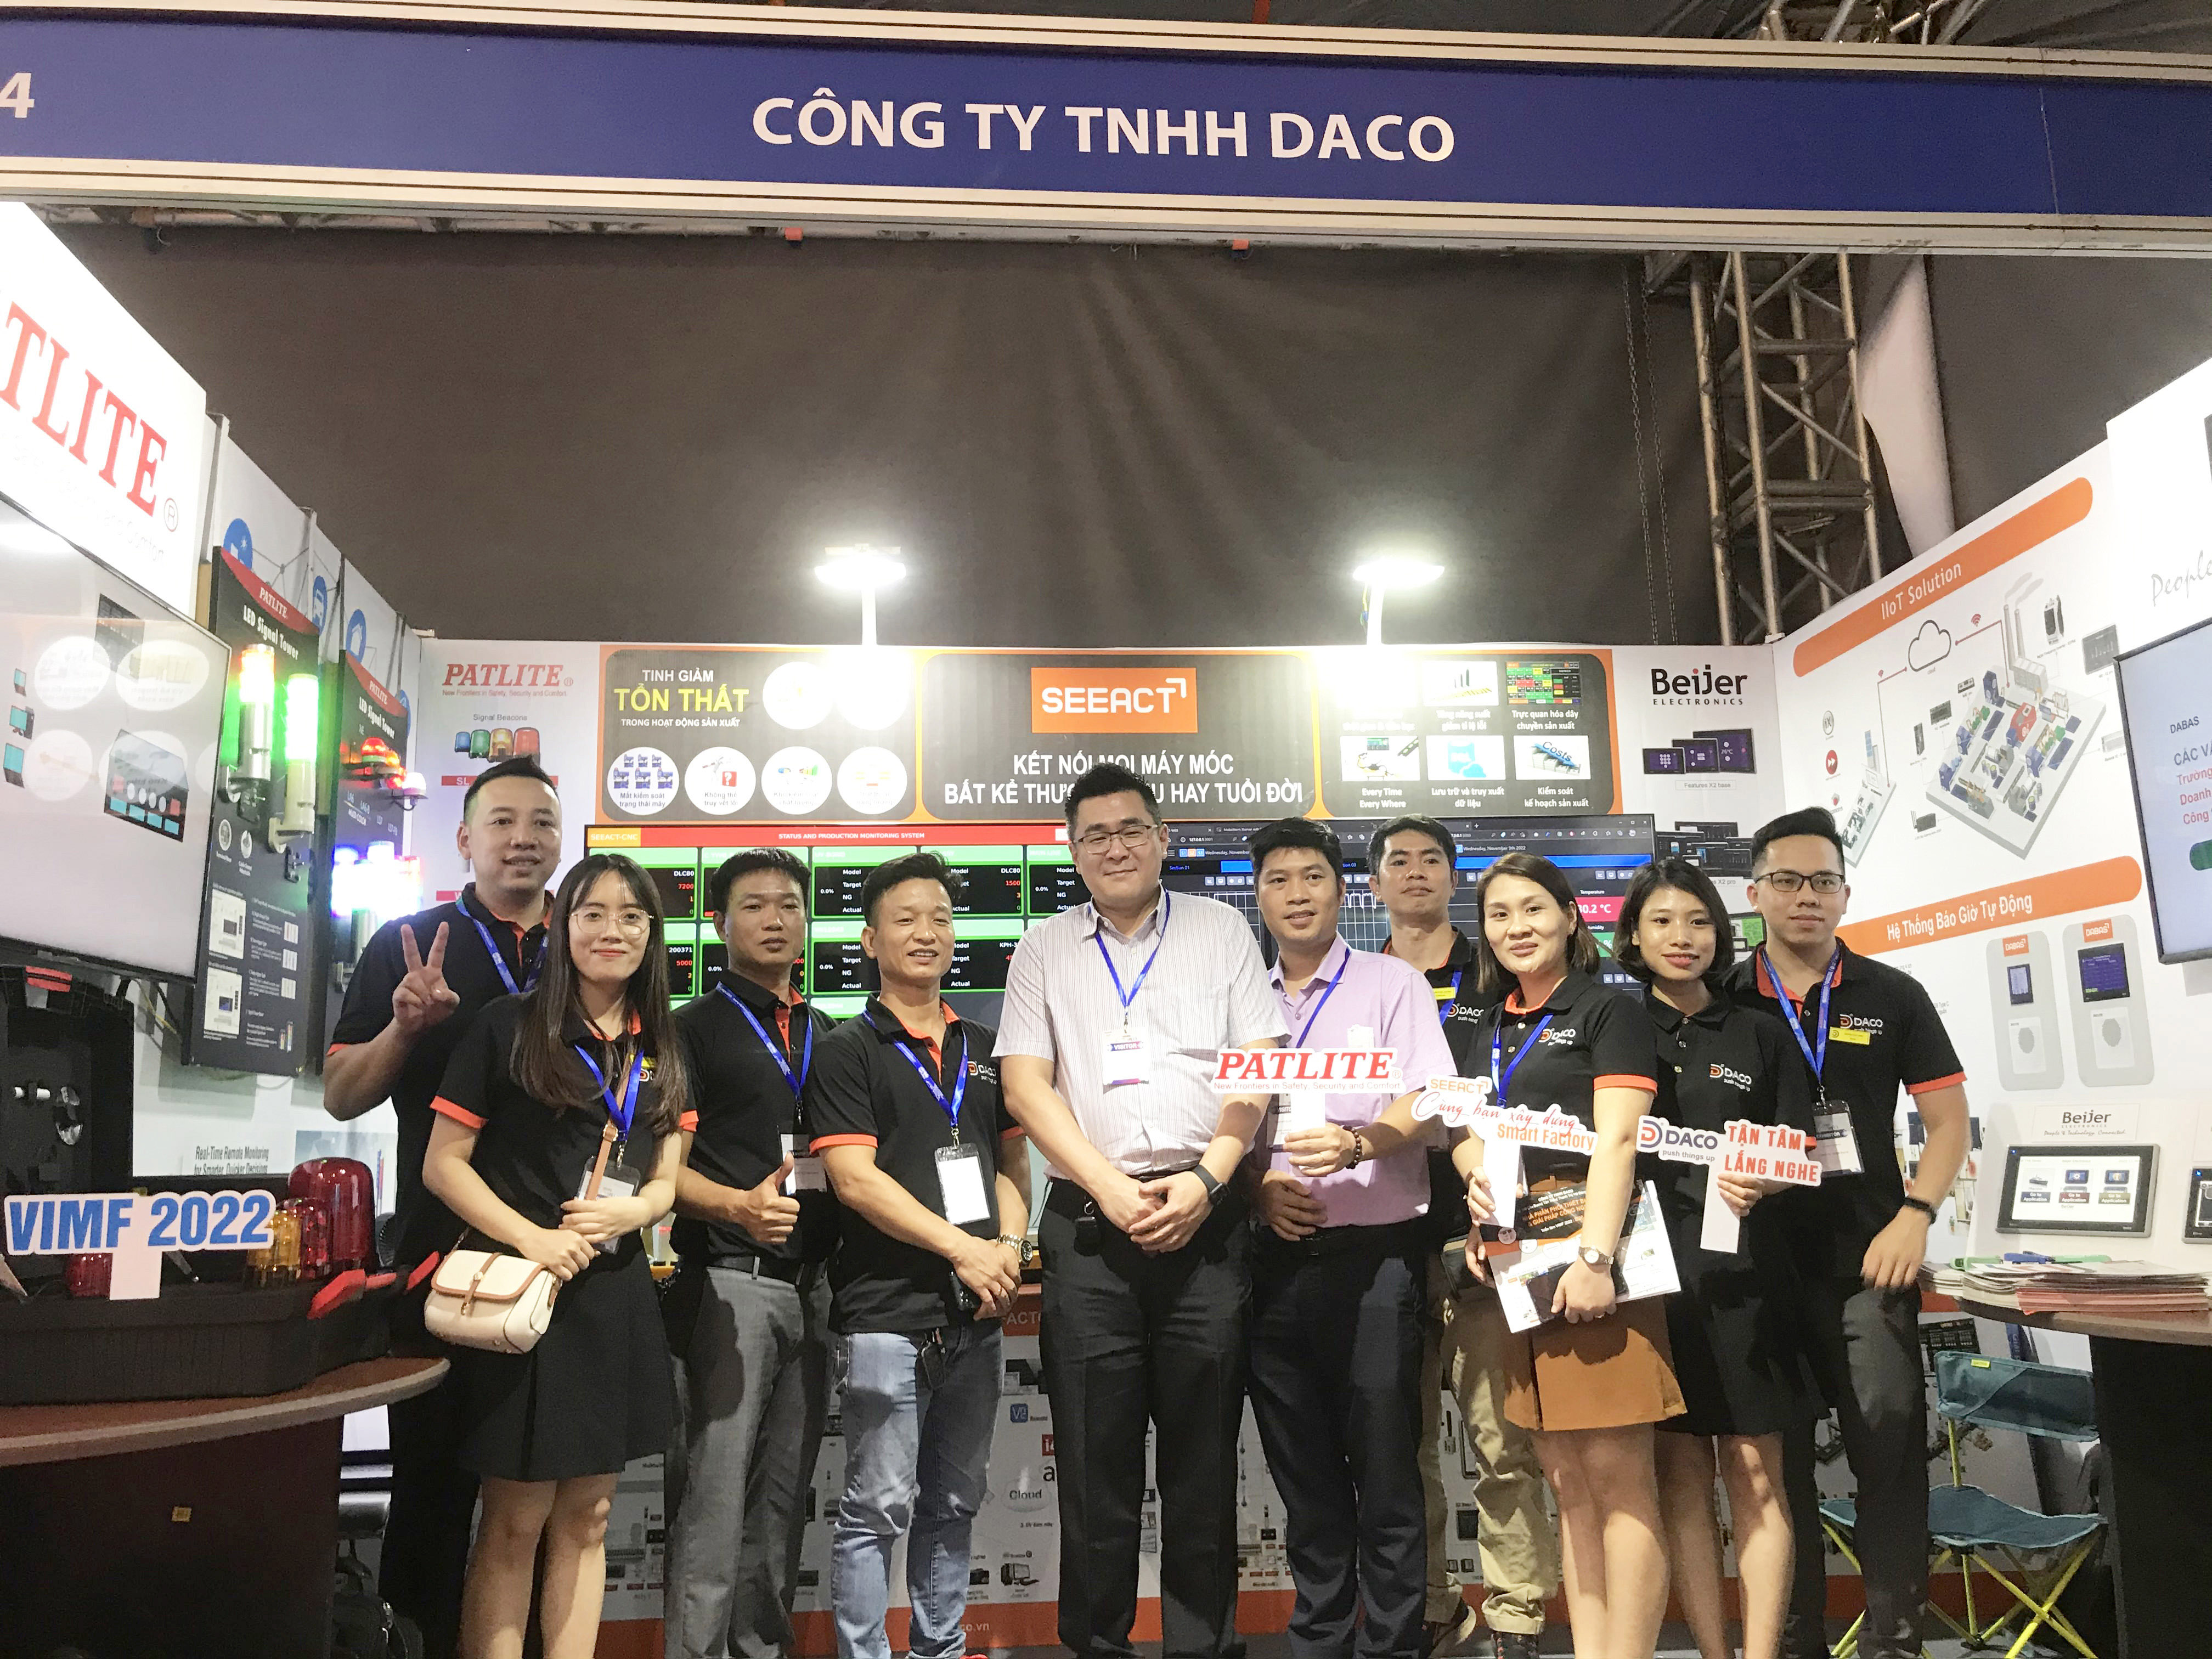 DACO - VIMF 2022 Bac Ninh